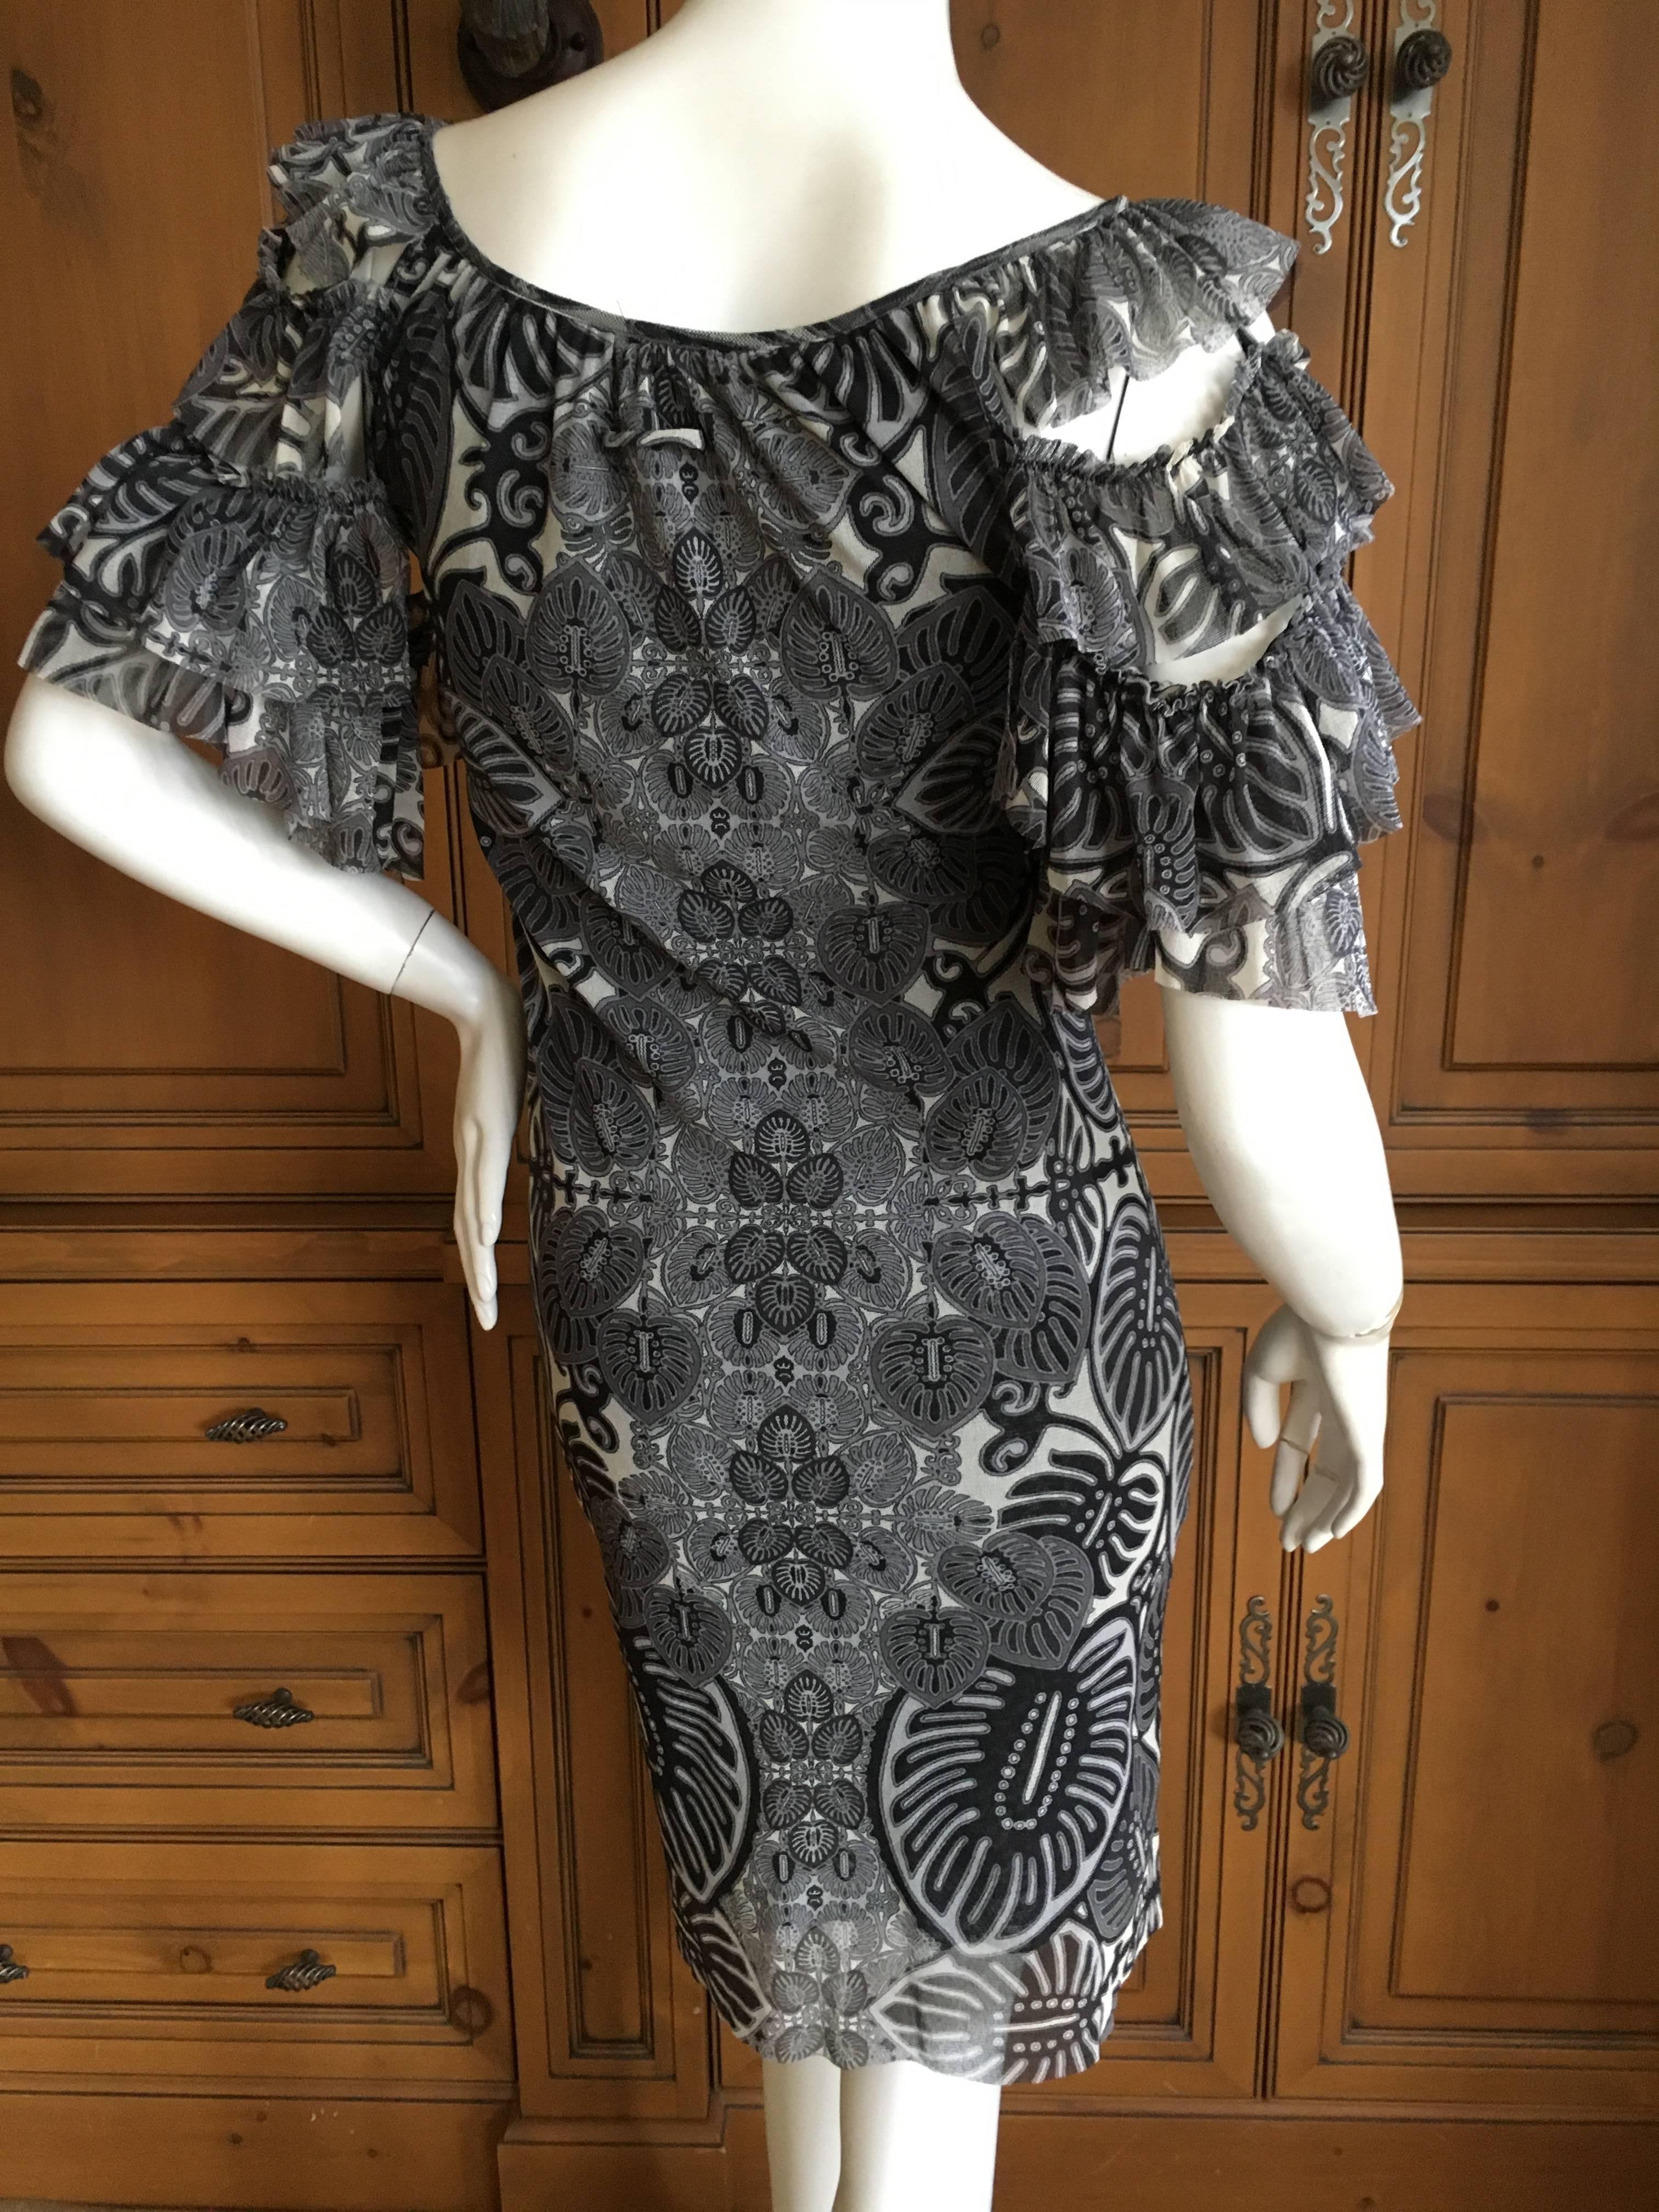 Jean Paul Gaultier Soleil  Dress with Ruffle Sleeves by Fuzzi.
Size S
Bust 34